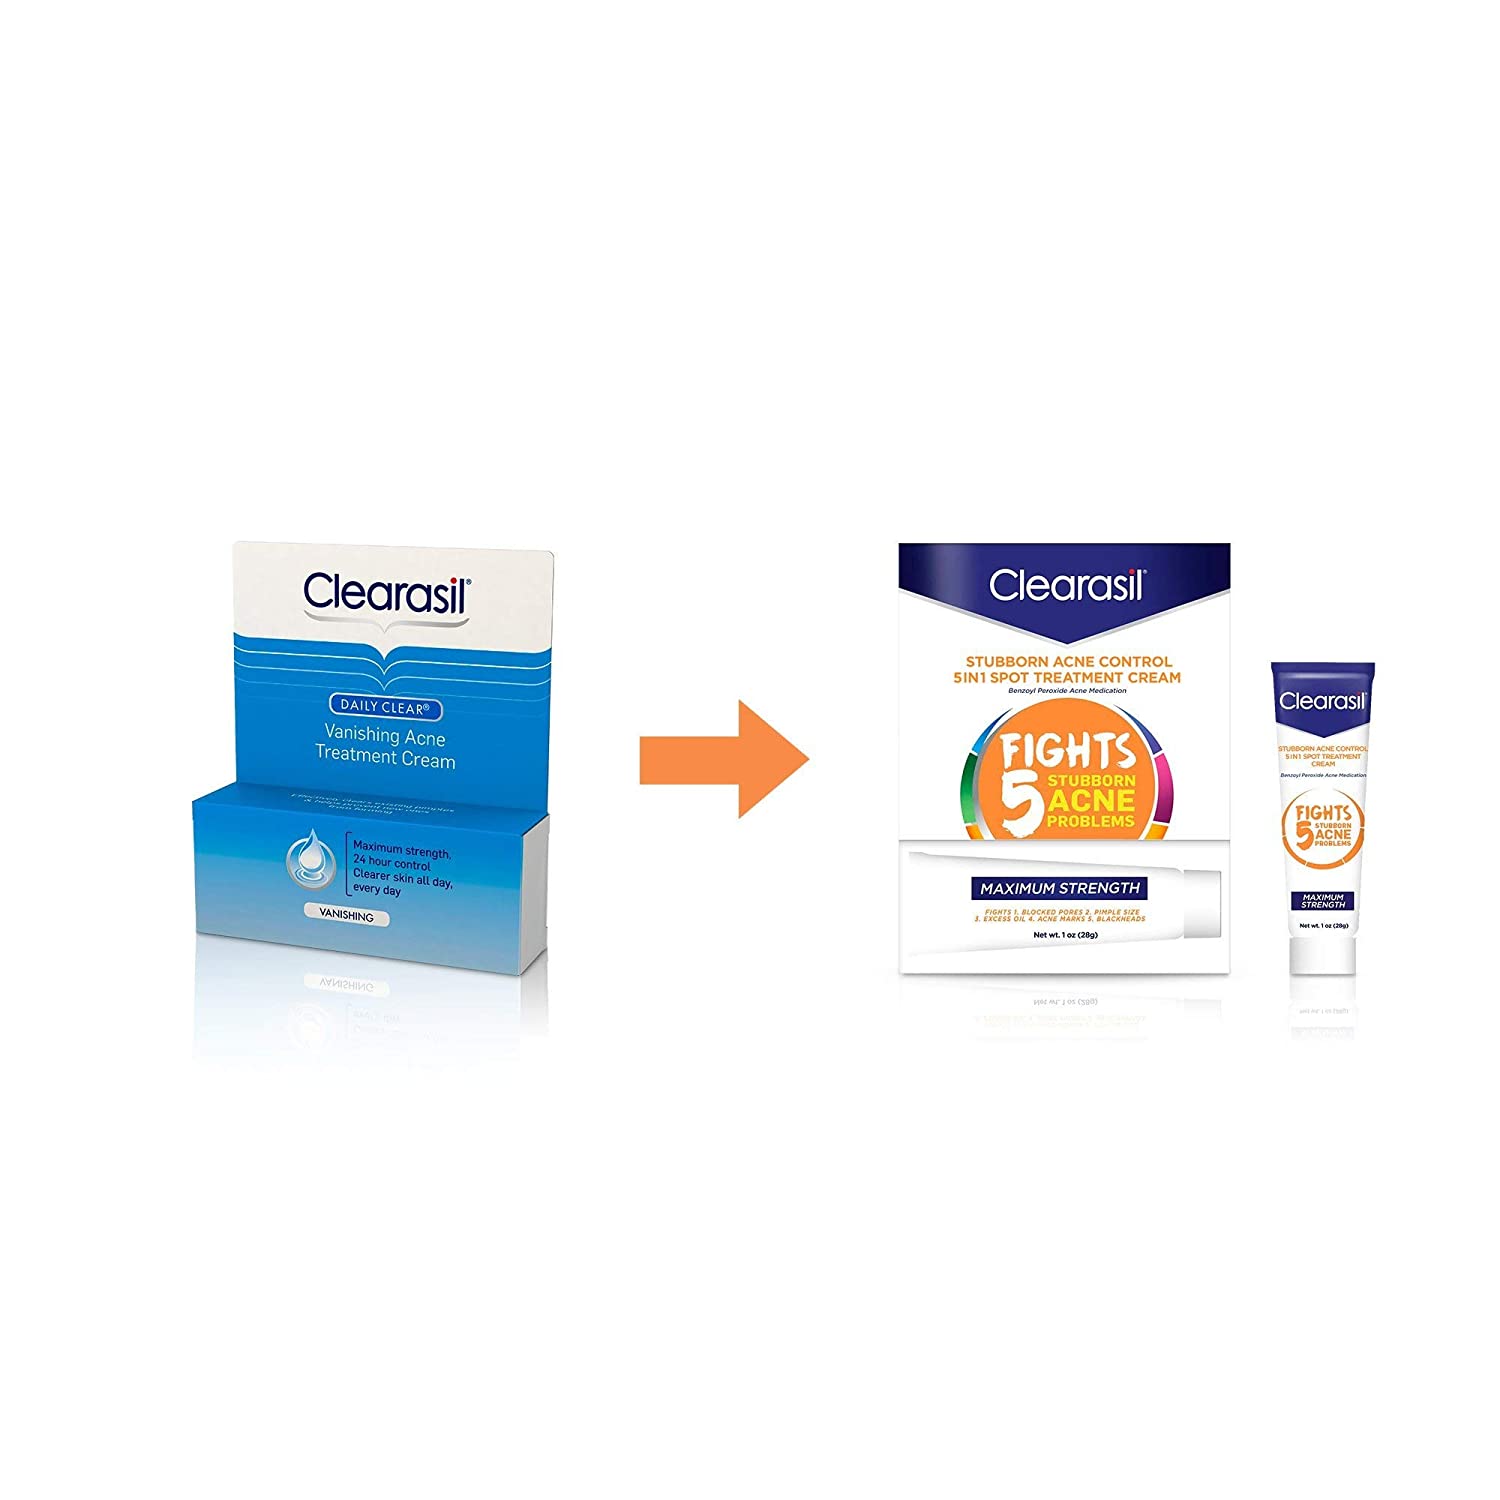 Clearasil Stubborn Acne Control 5 in 1 Spot Treatment Cream, 1 oz - image 2 of 2